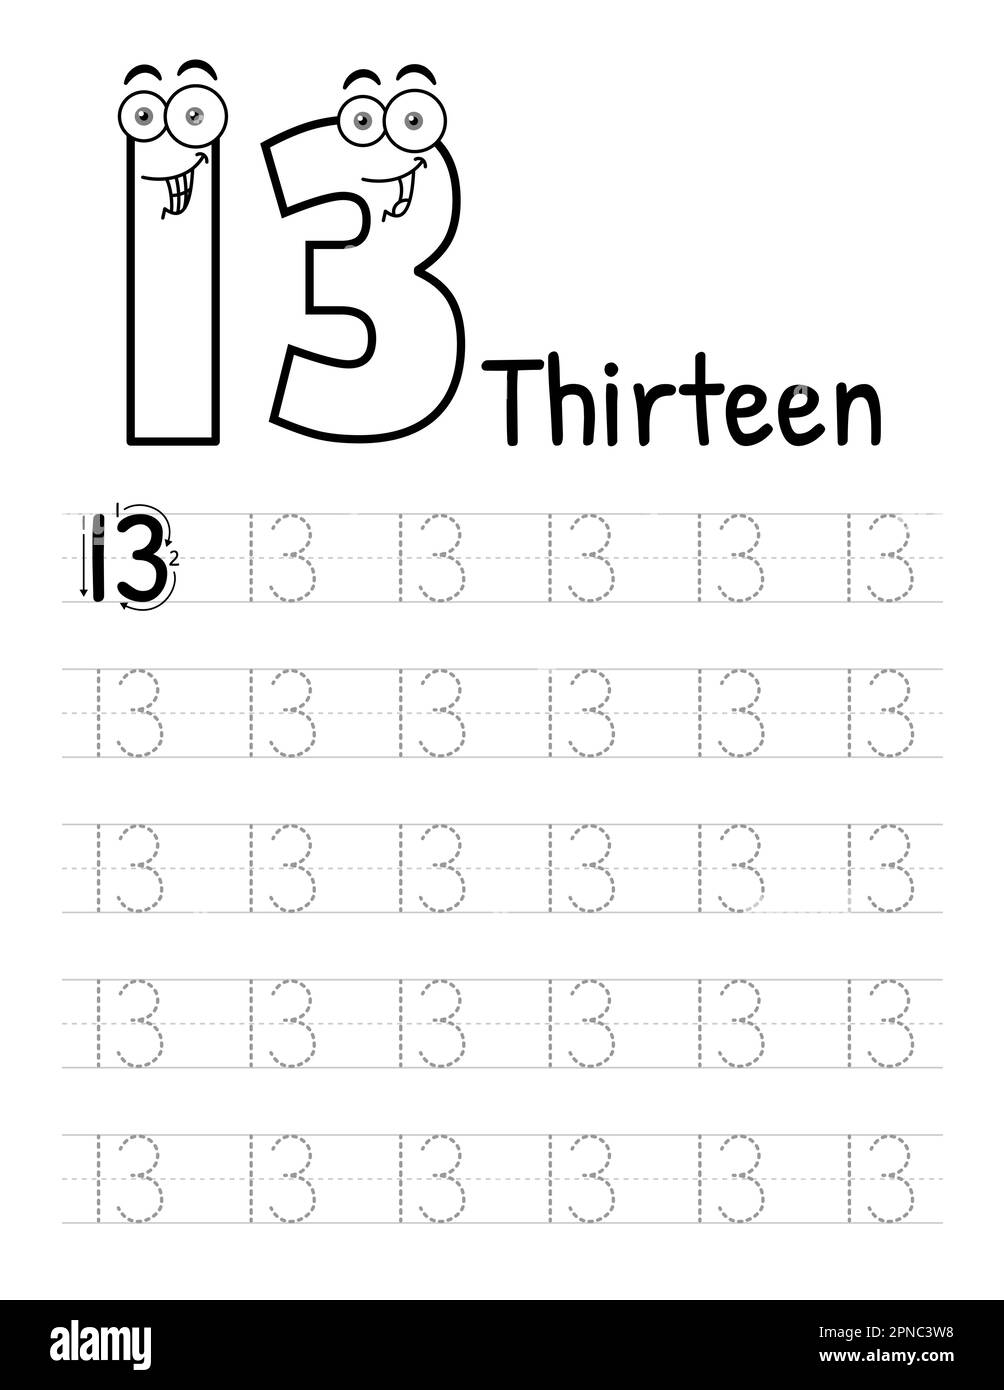 Number Tracing Interior For Kids. Children Writing Worksheet. Premium Vector Elements. Stock Vector